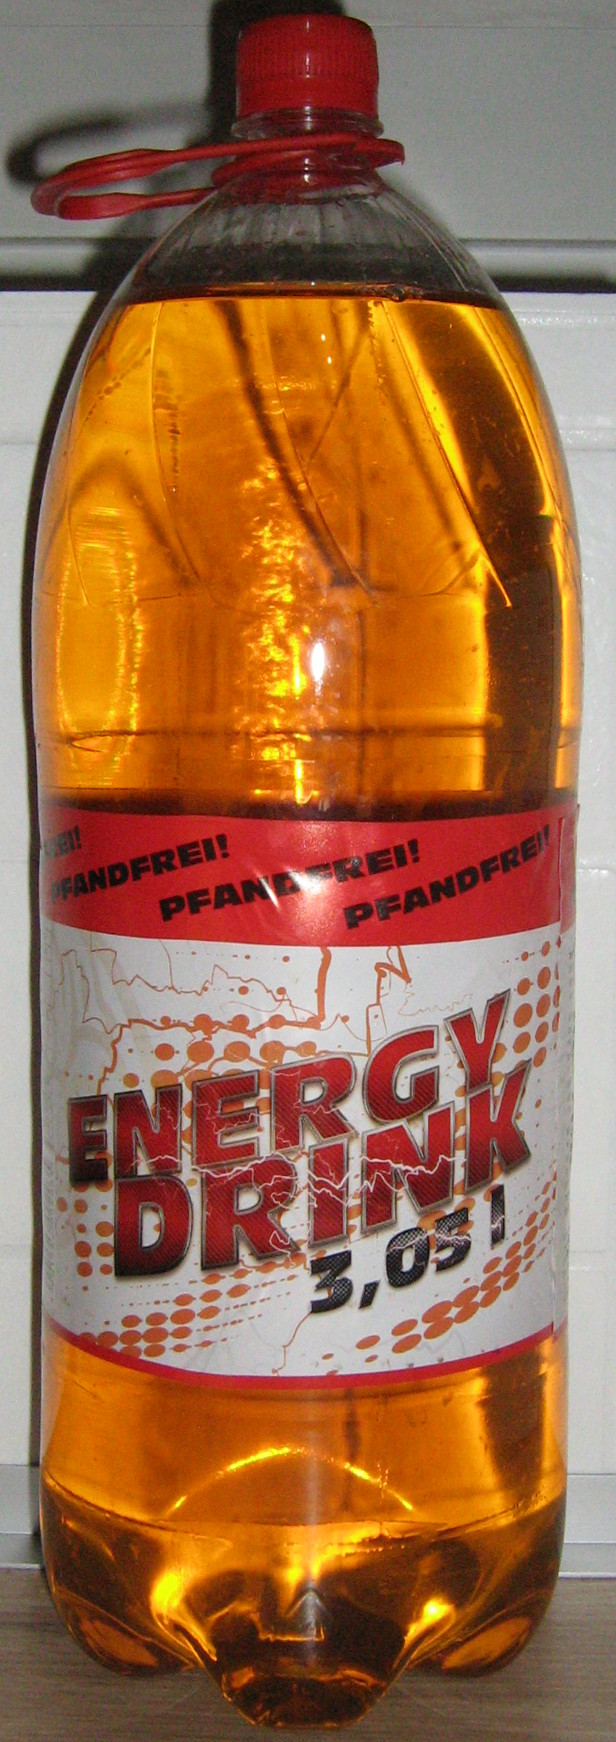 Energy Drink 3,05l